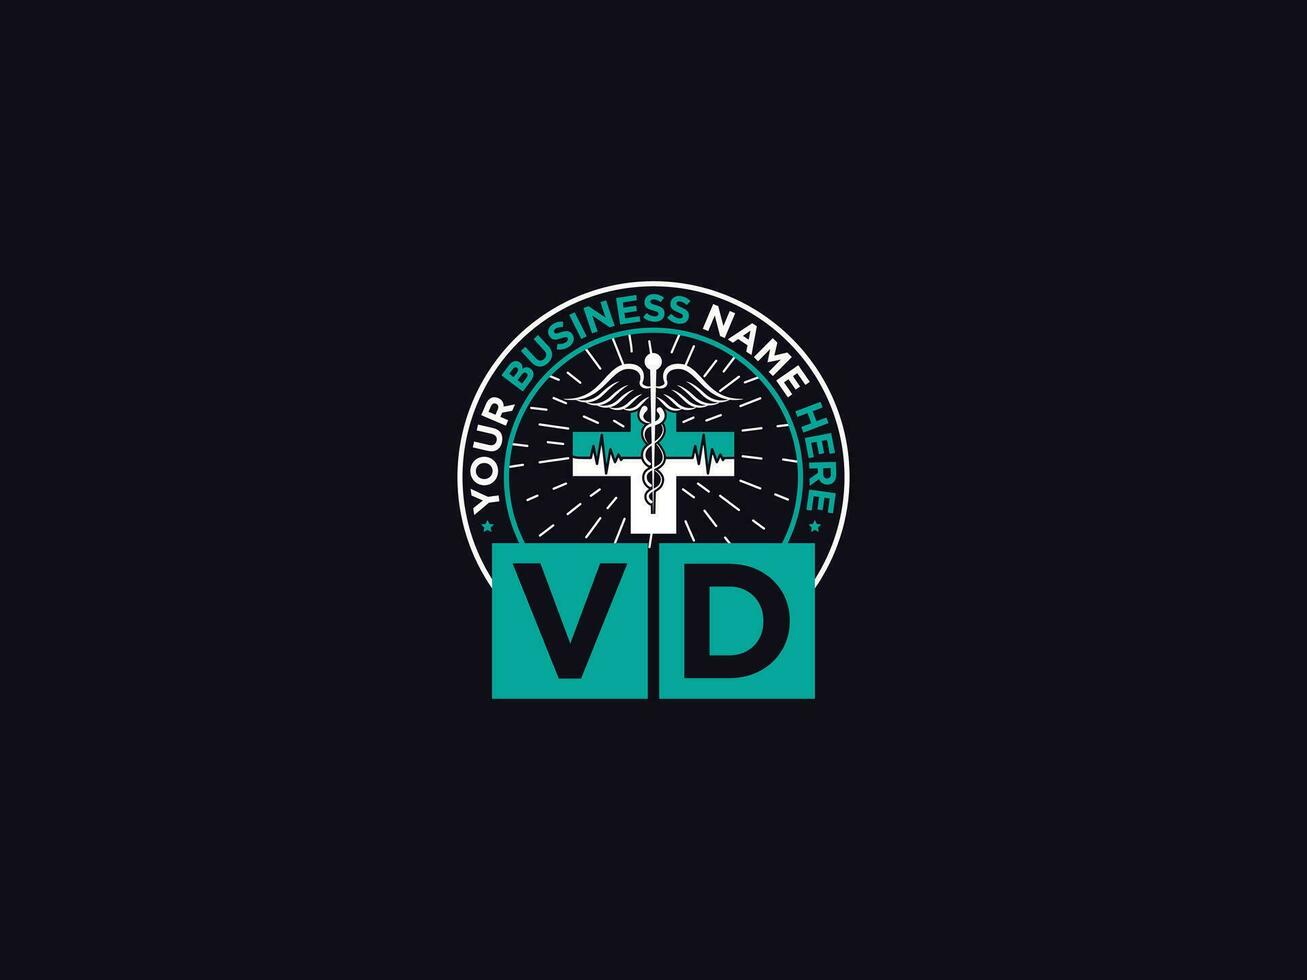 Clinical Vd Logo Icon, Medical Vd dv Logo Letter Design For Doctors vector